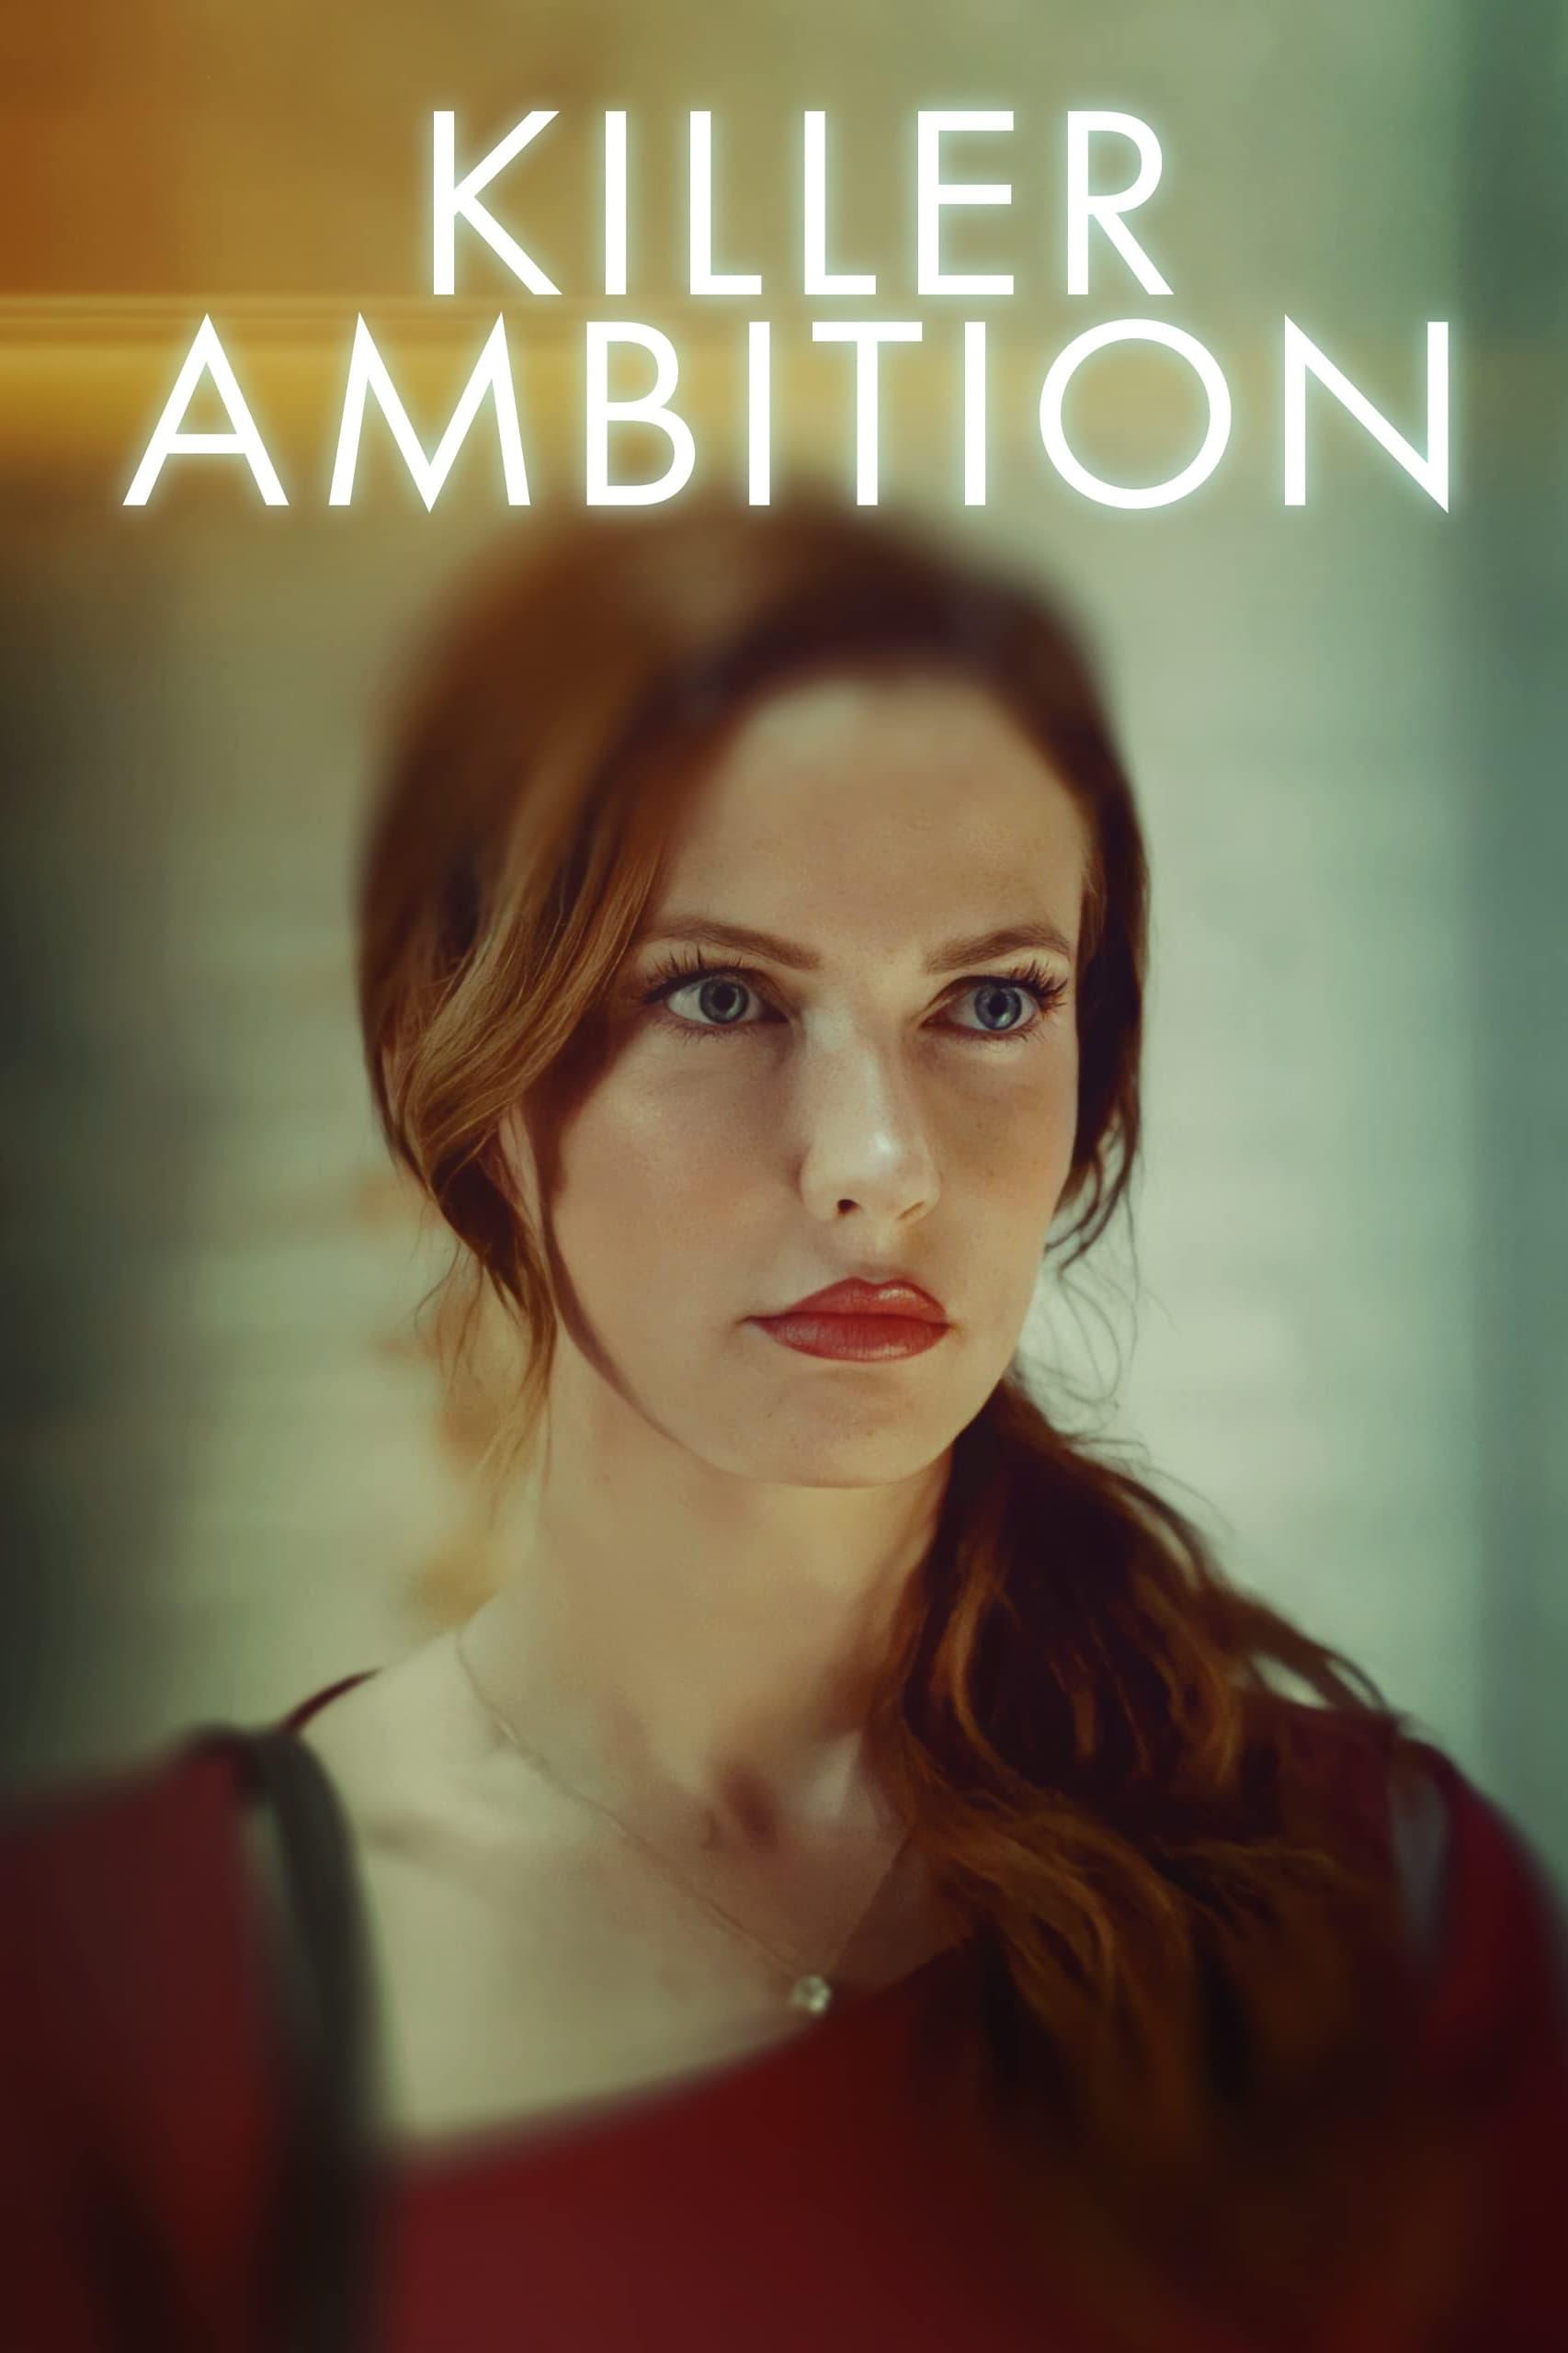 Killer Ambition poster